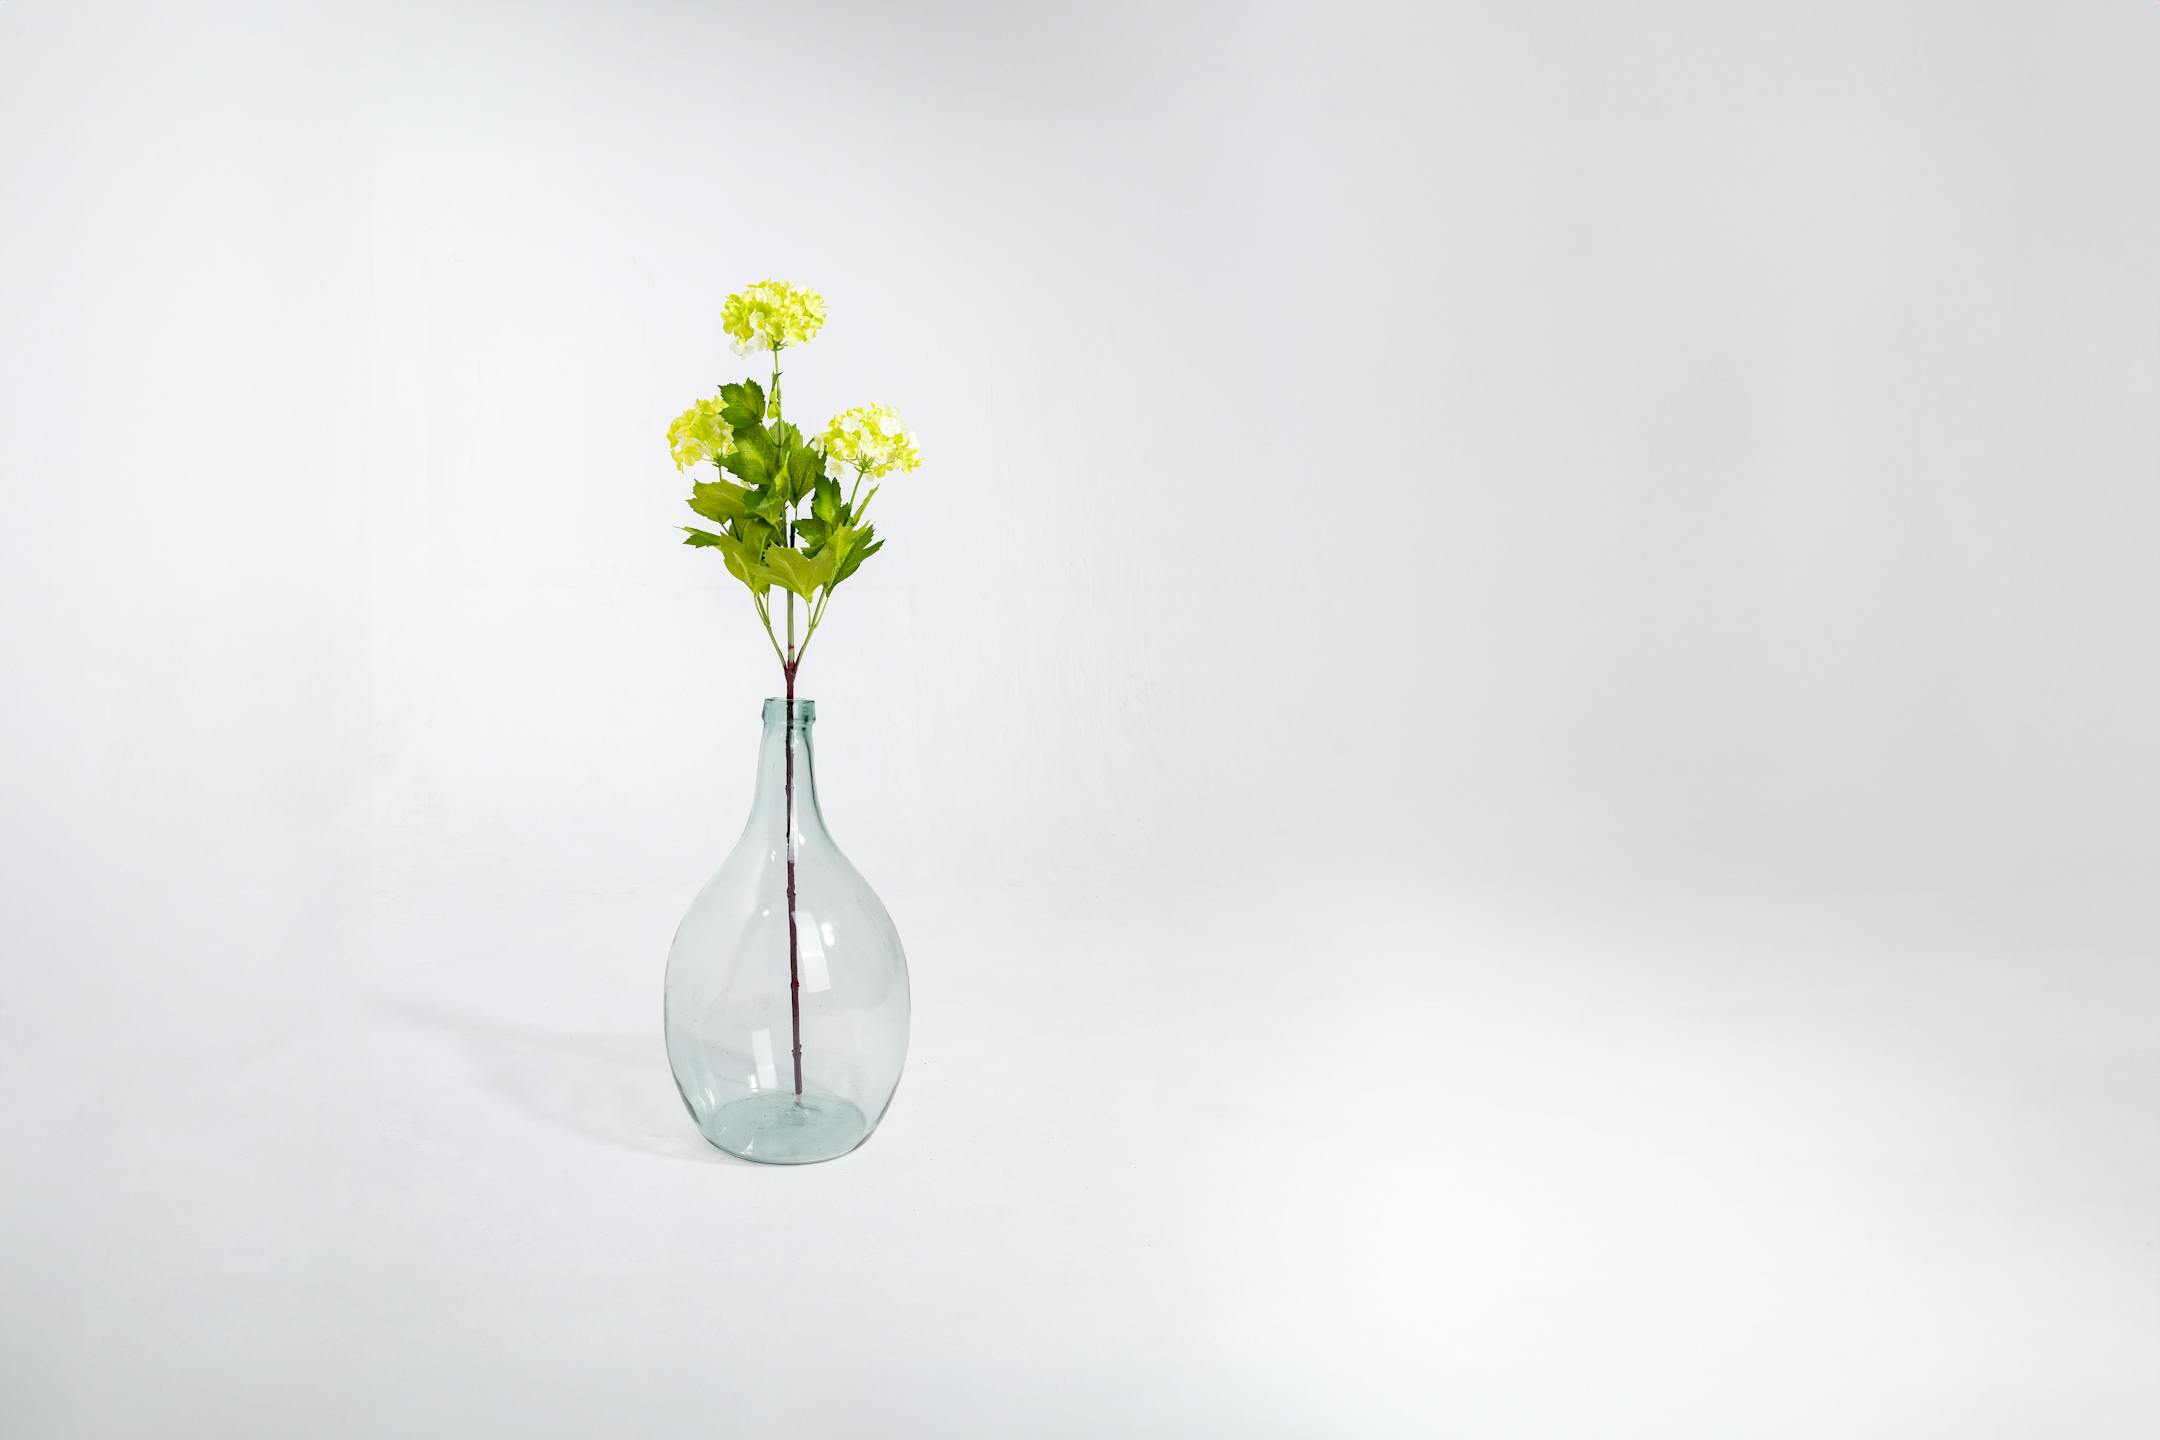 Green artificial viburnum stem in glass vase